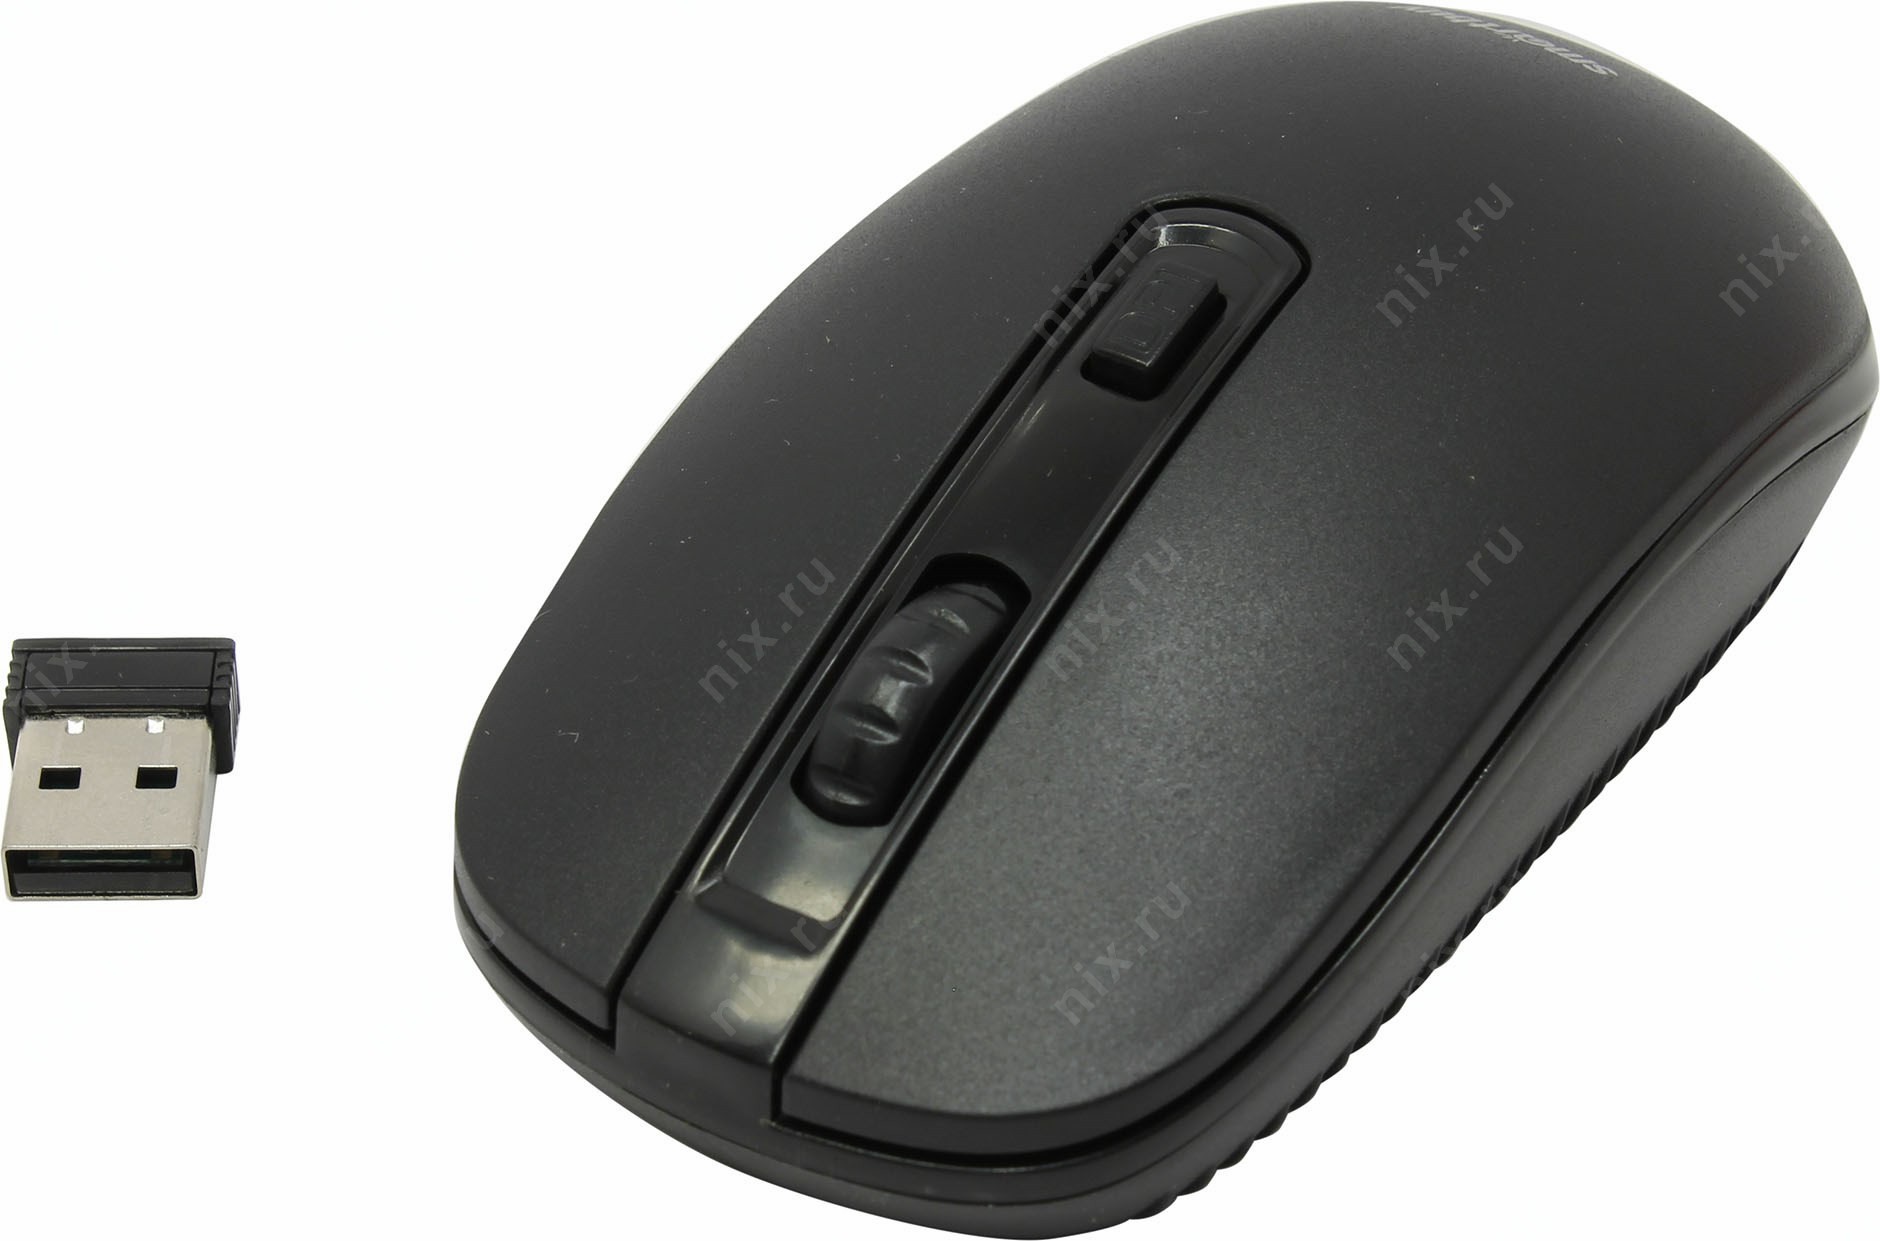 SmartBuy One Wireless Optical Mouse SBM-359AG-K (RTL) USB 4btn+Roll, 